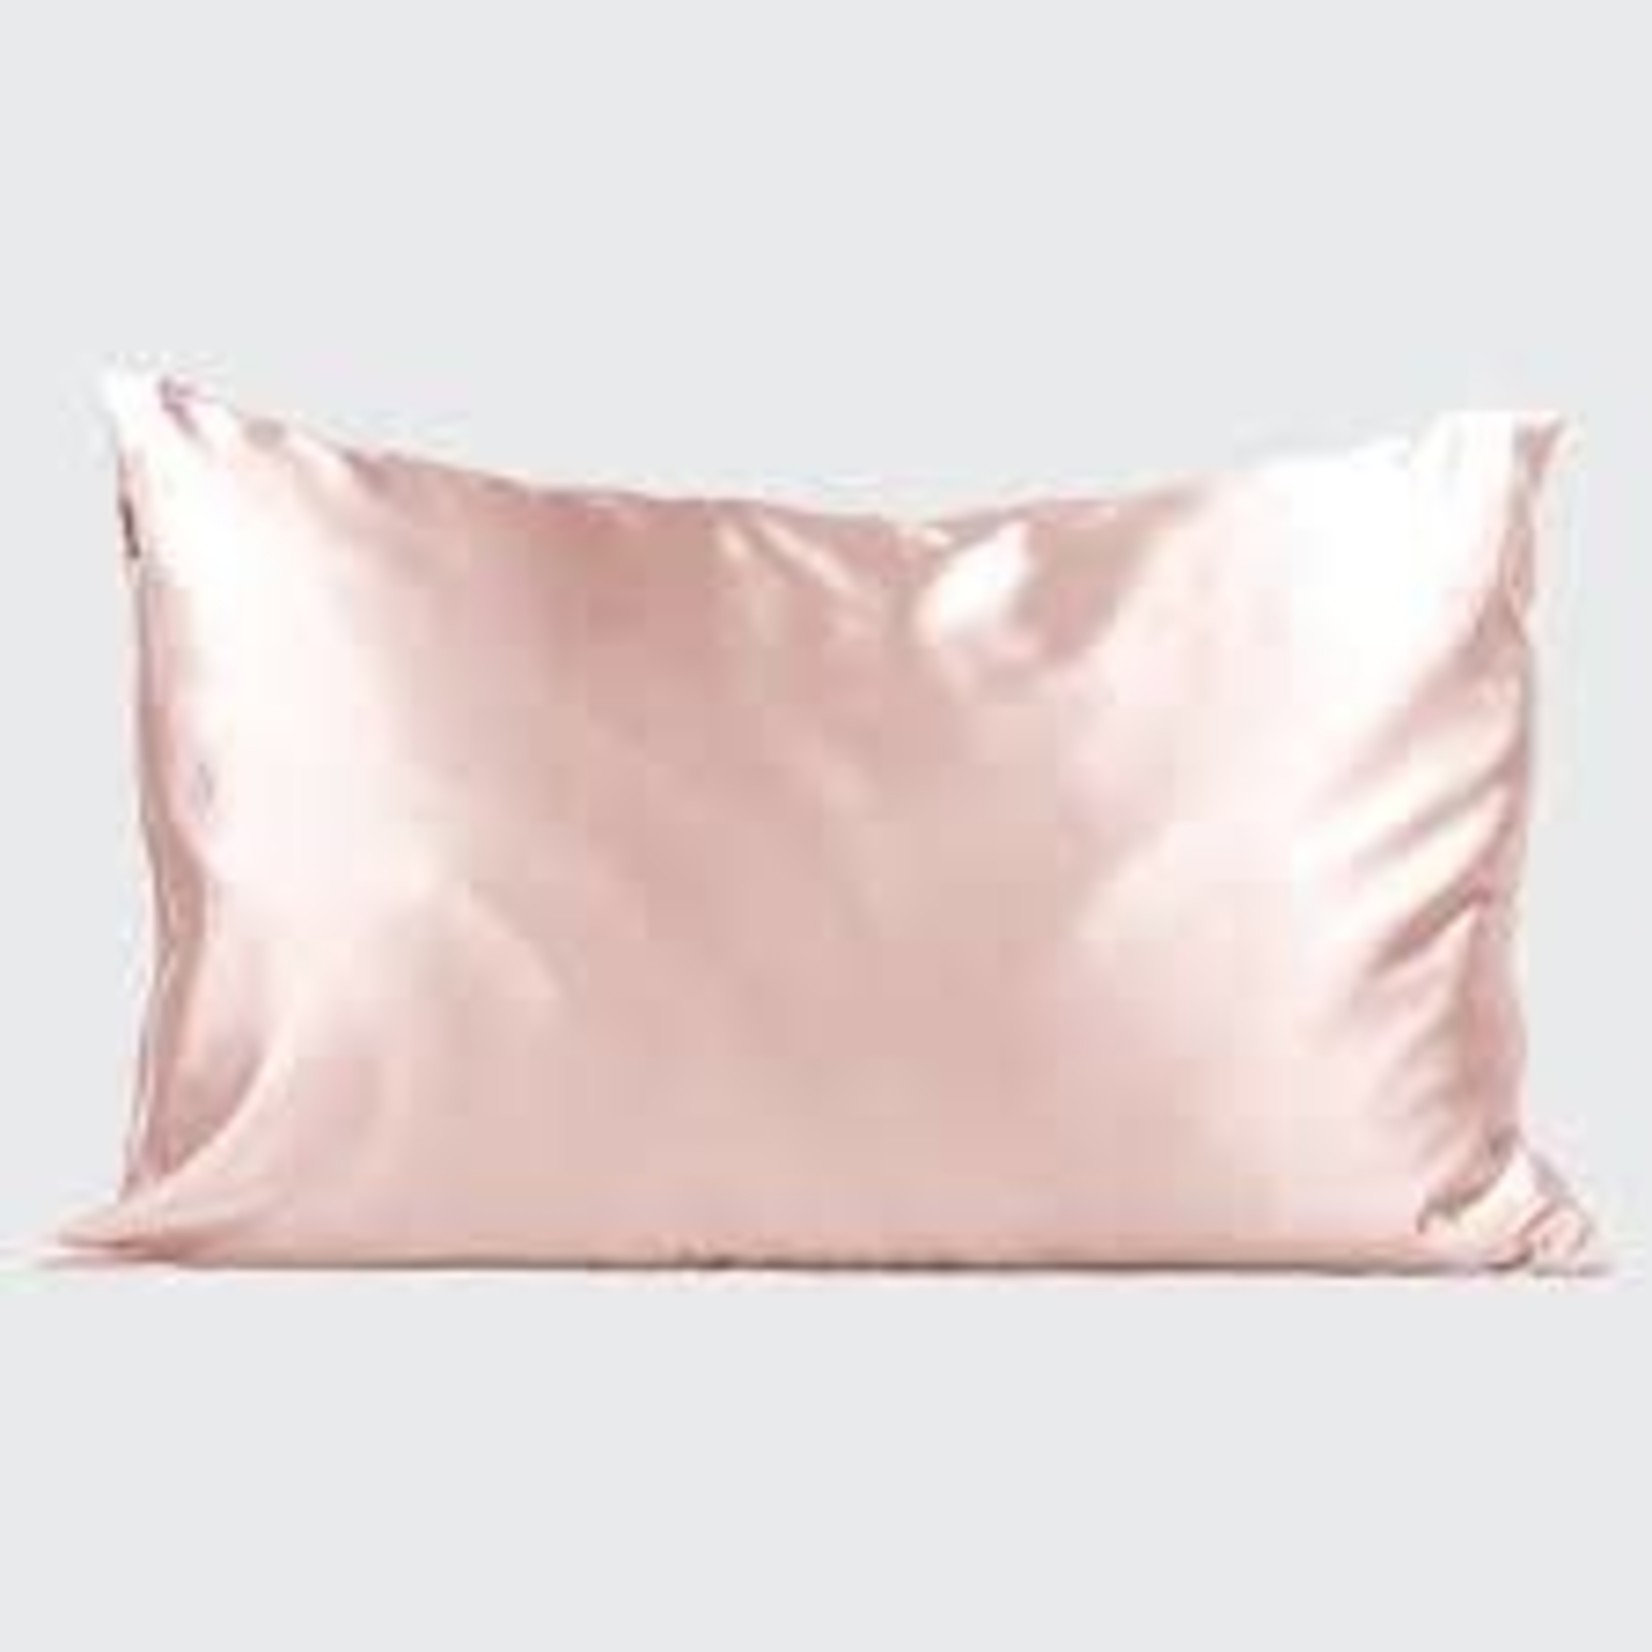 Kitsch Blush Satin Pillowcase